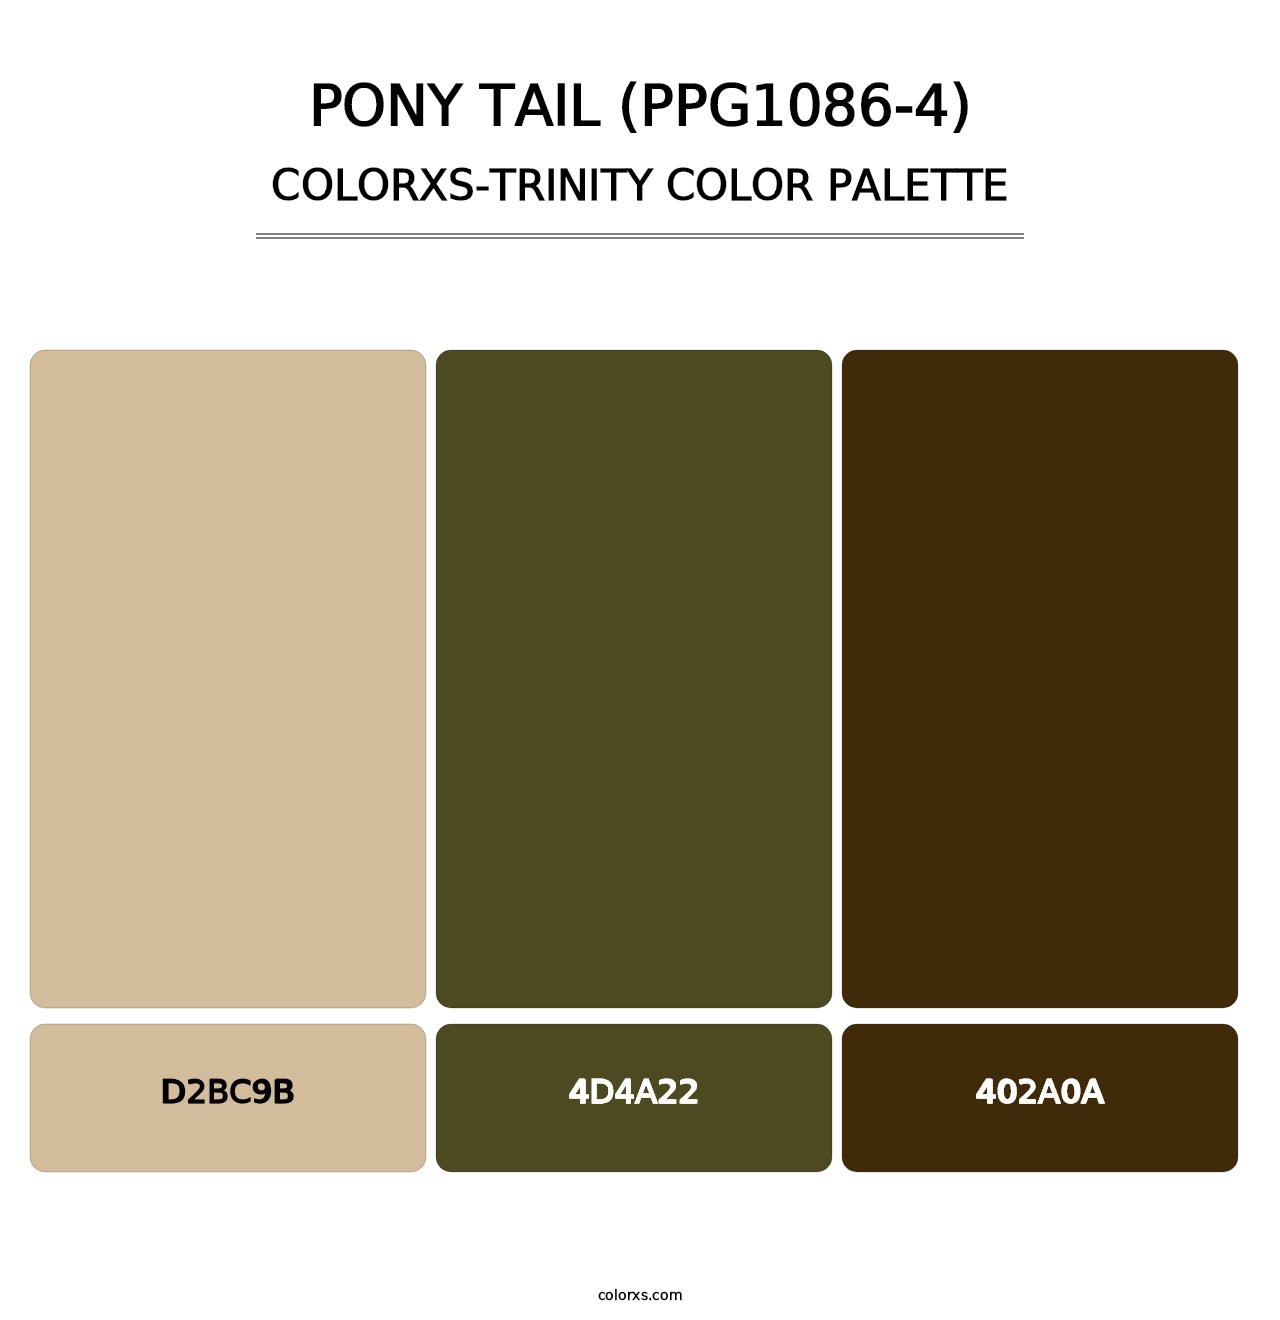 Pony Tail (PPG1086-4) - Colorxs Trinity Palette